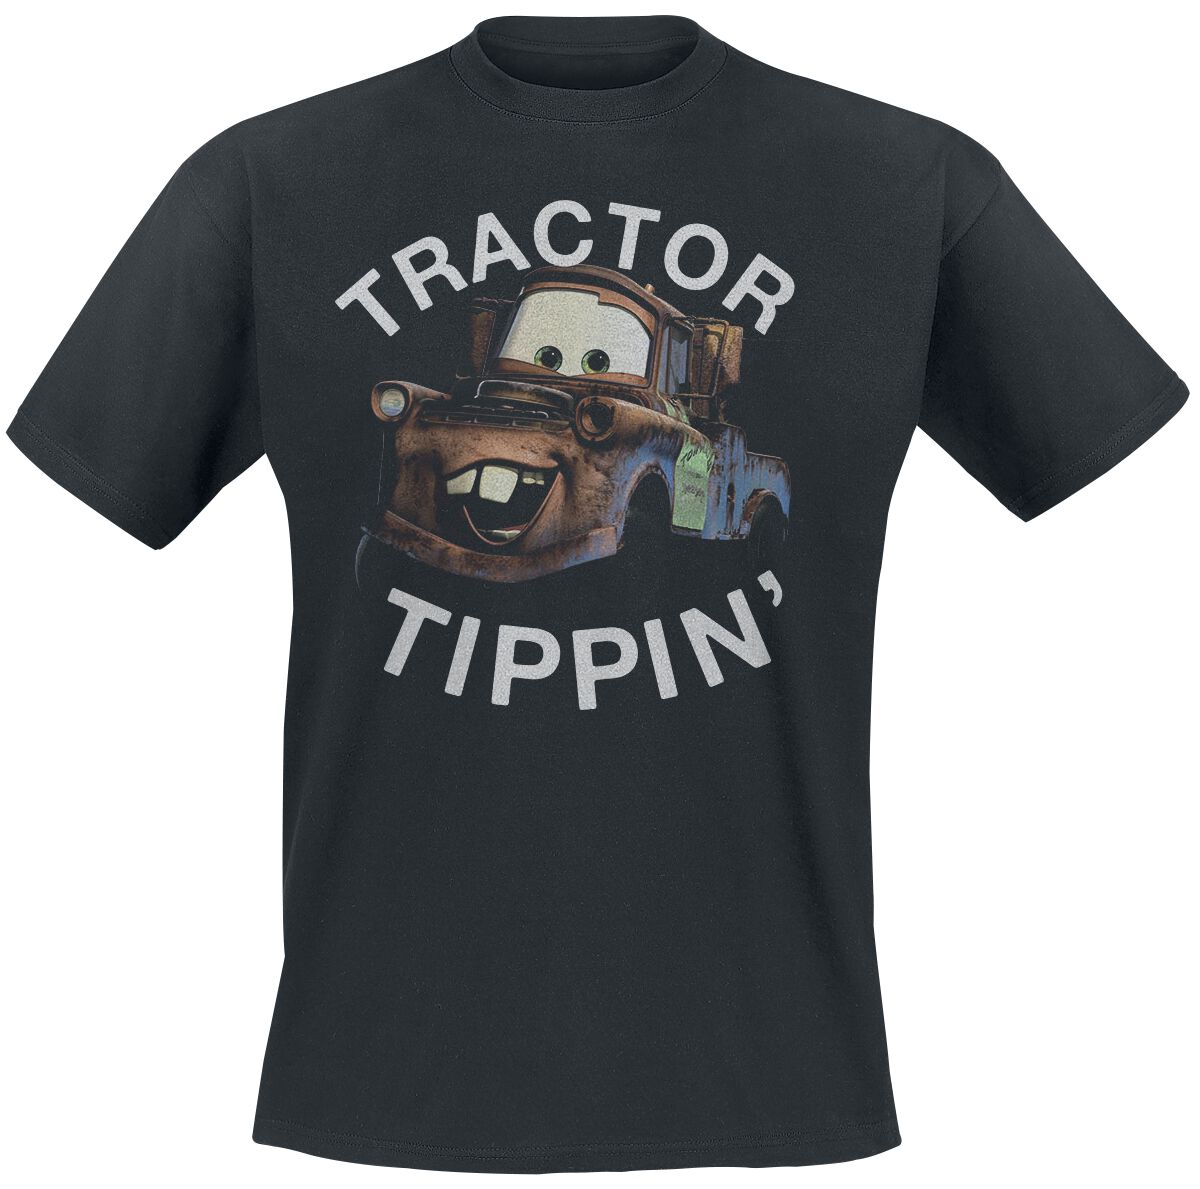 Cars Trippin' T-Shirt black